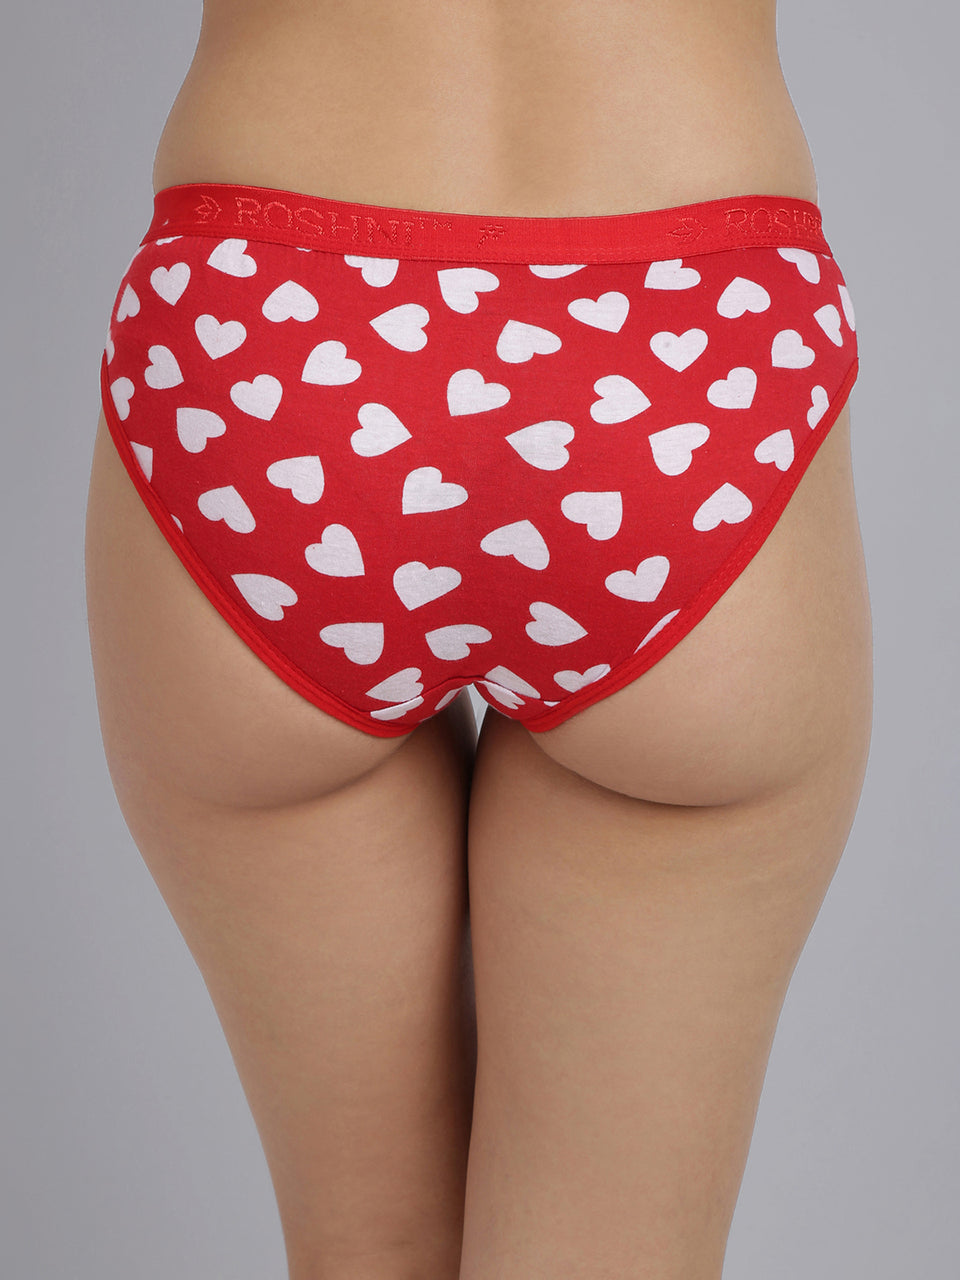 women red heart printed cotton panties